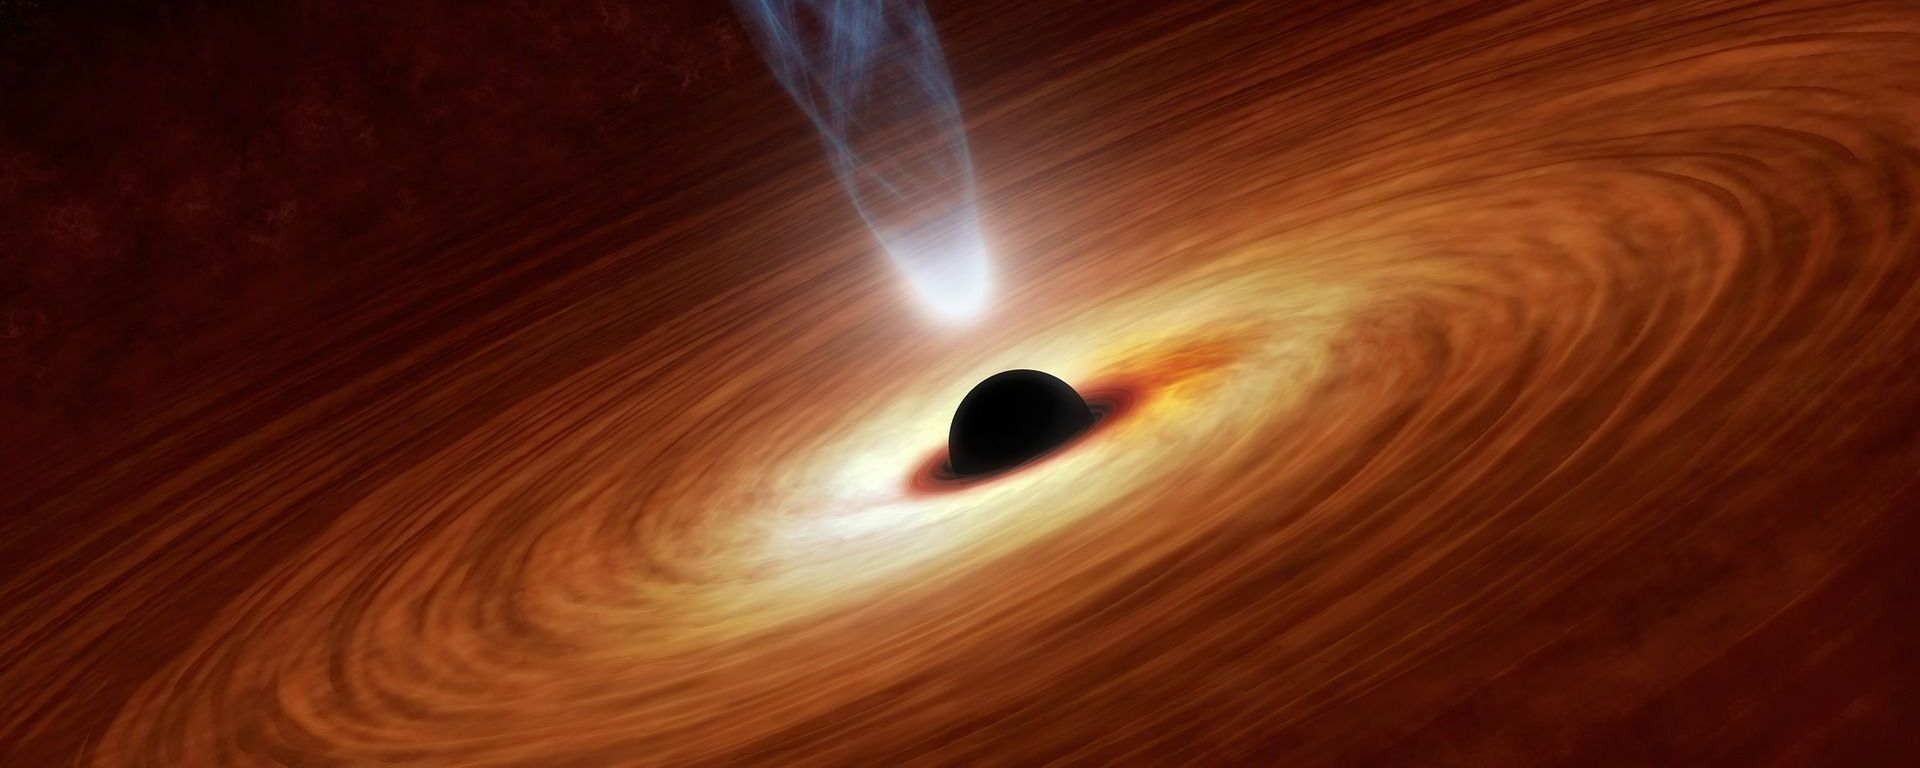 Un agujero negro (imagen referencial) - Sputnik Mundo, 1920, 18.10.2021